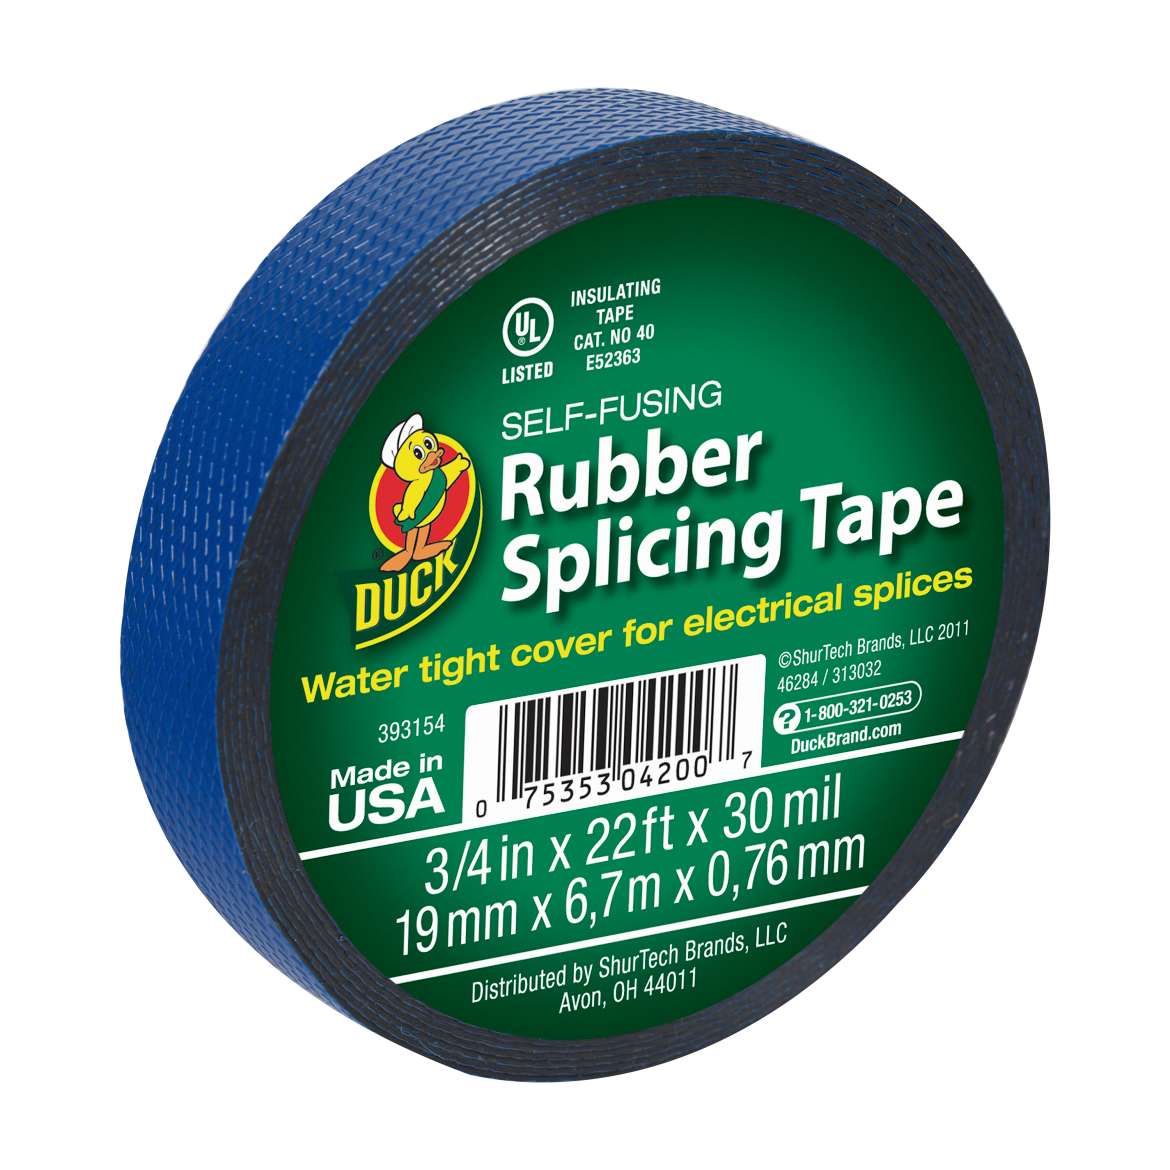 Rubber Splicing Tape Image